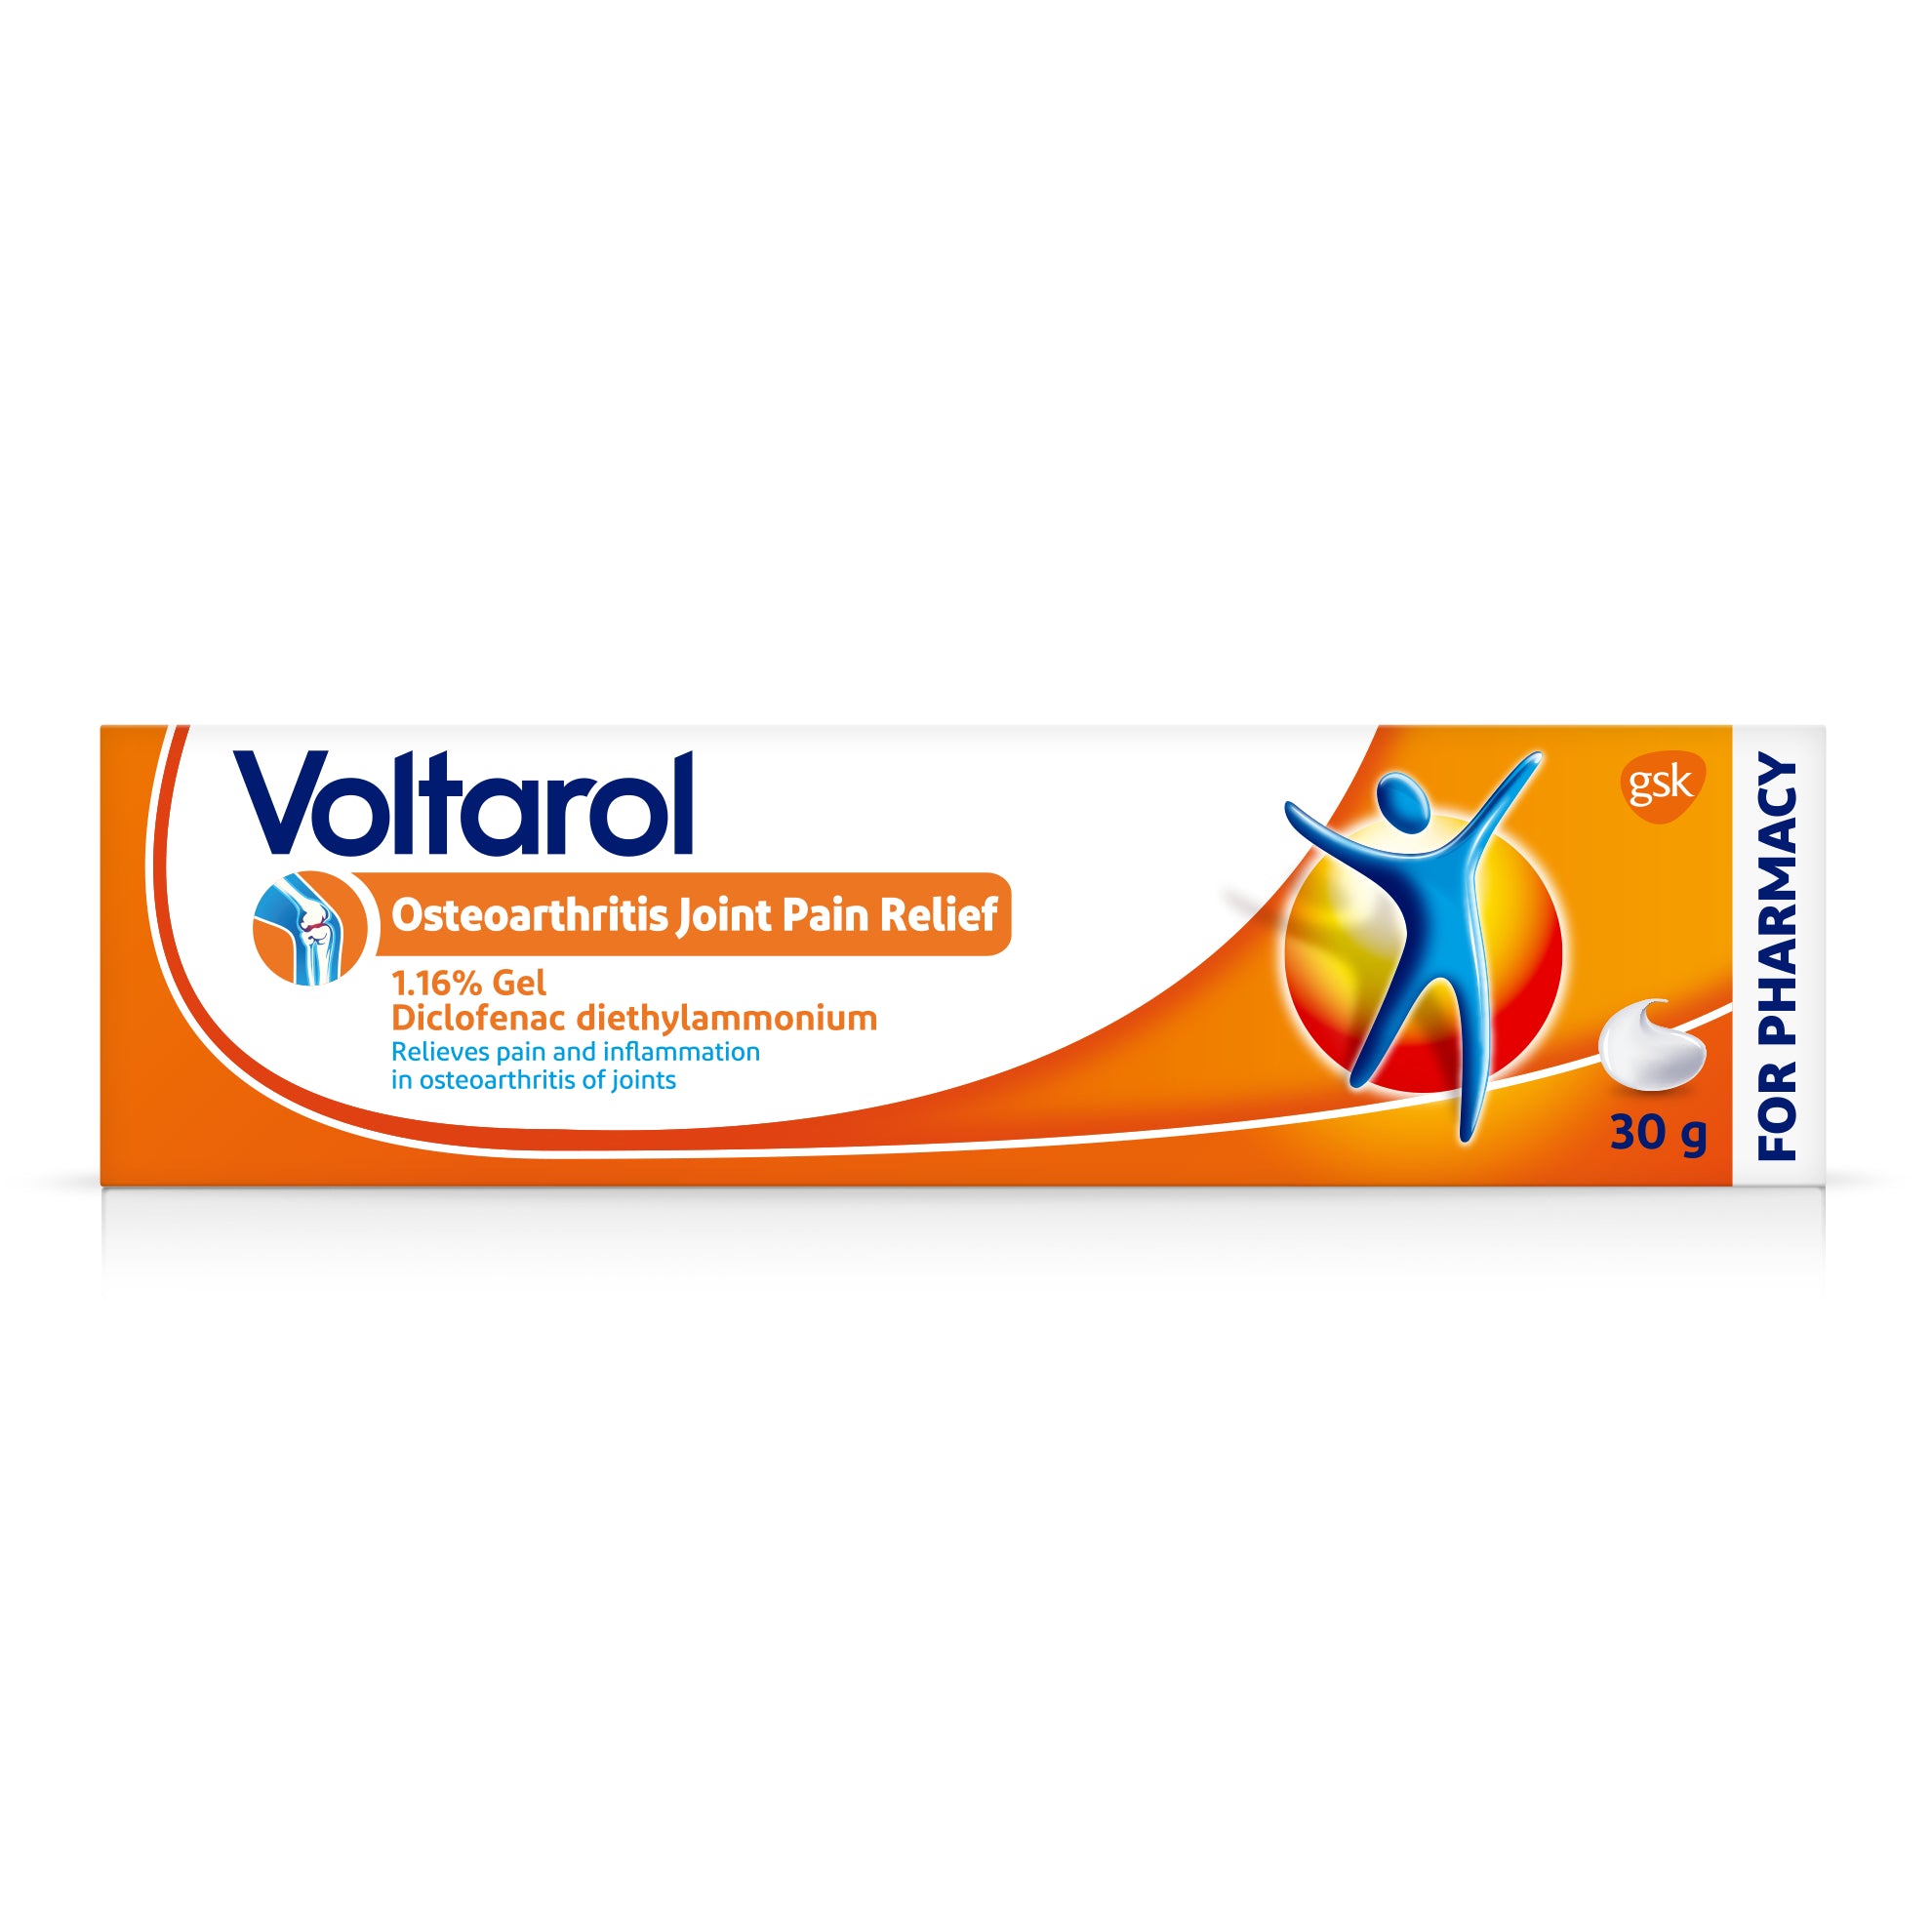 Voltarol emulgel P gel | LloydsPharmacy